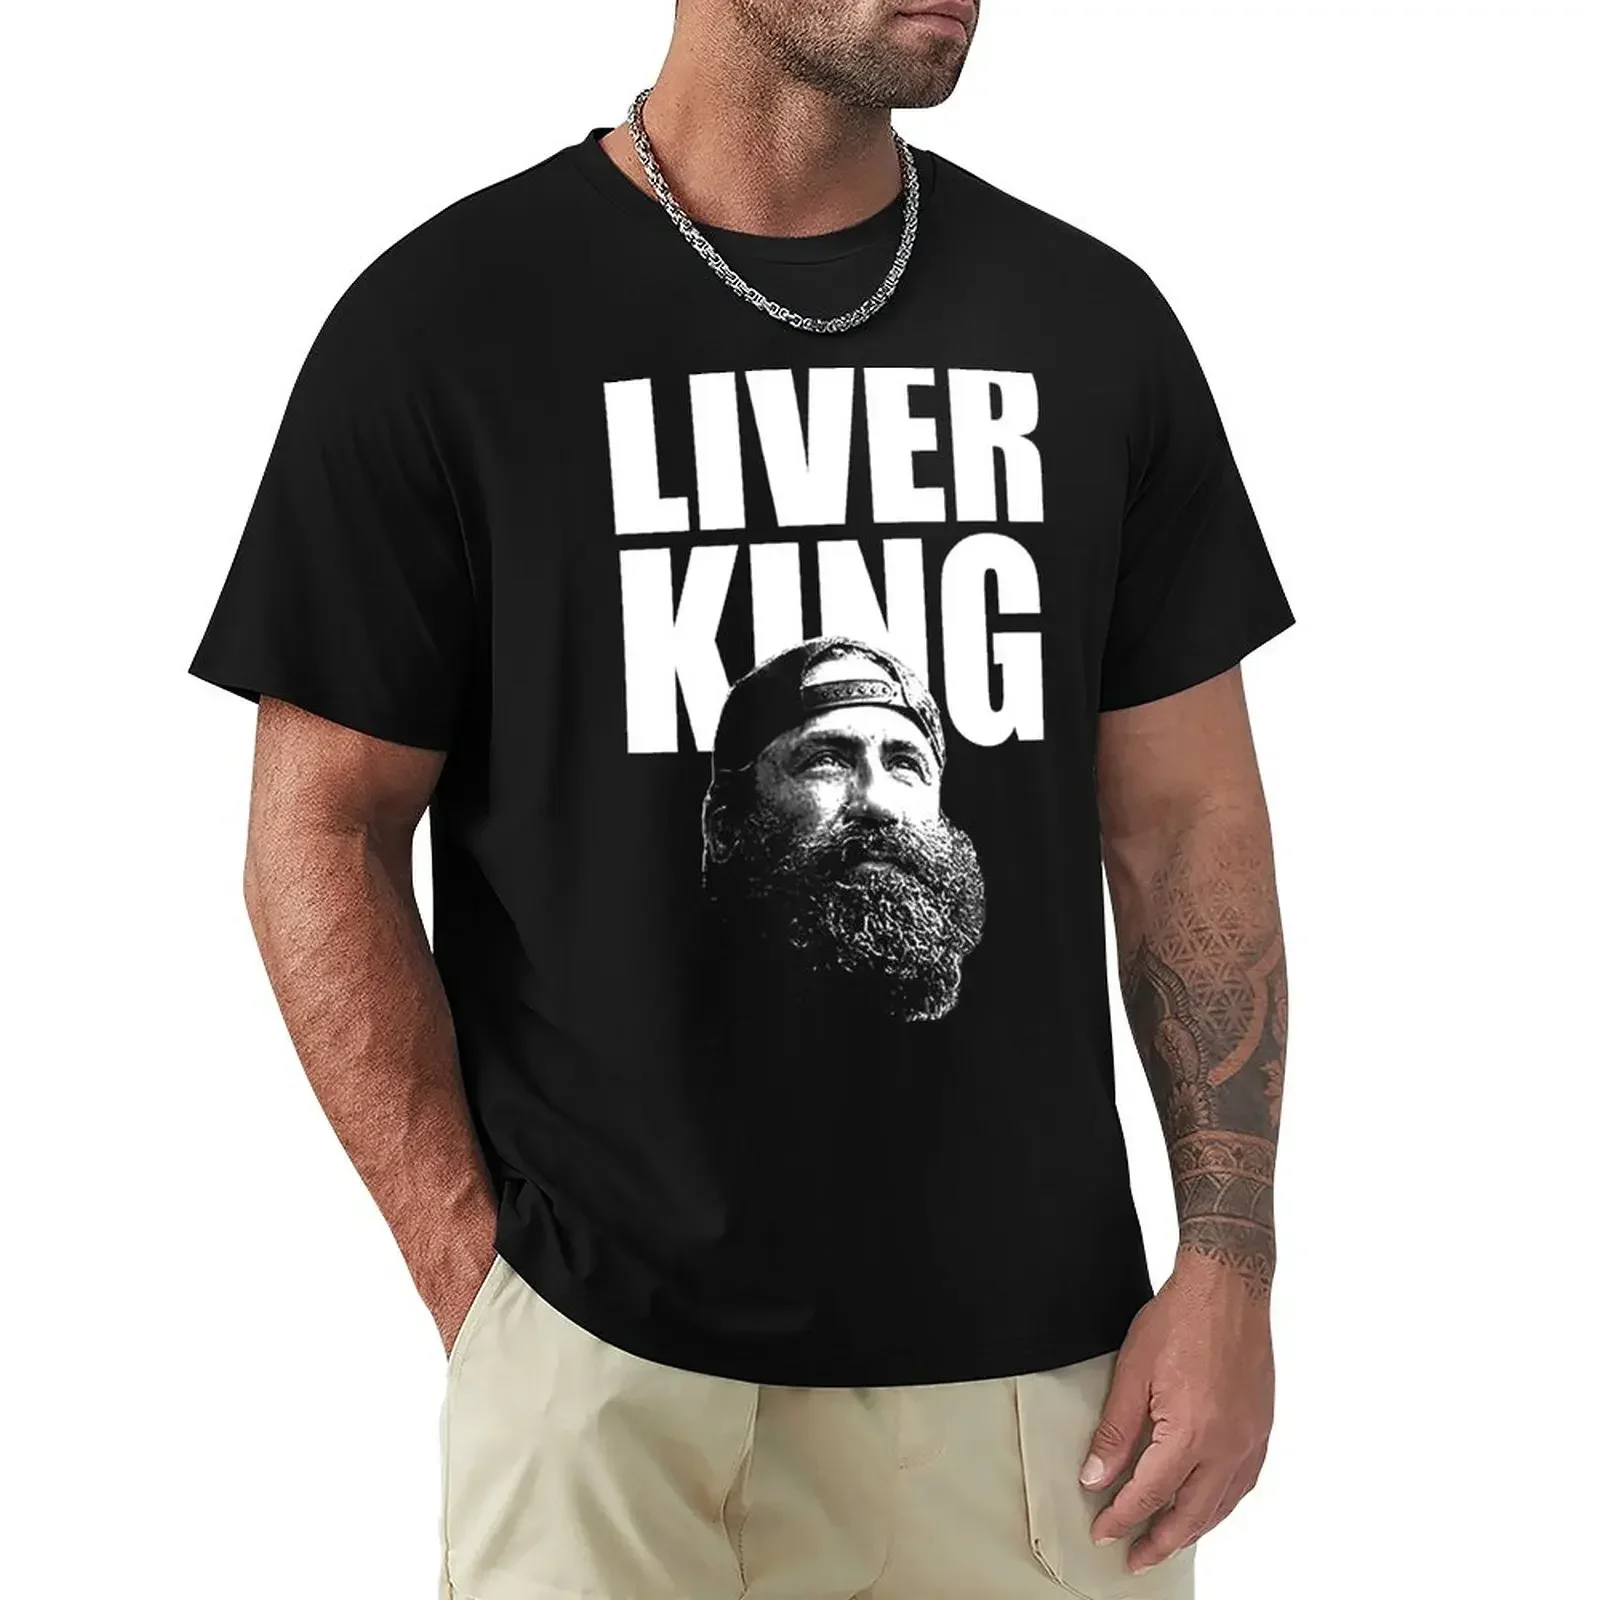 

The Liver King T-Shirt Short sleeve tee customs plain fruit of the loom mens t shirts sublime tees t shirt men